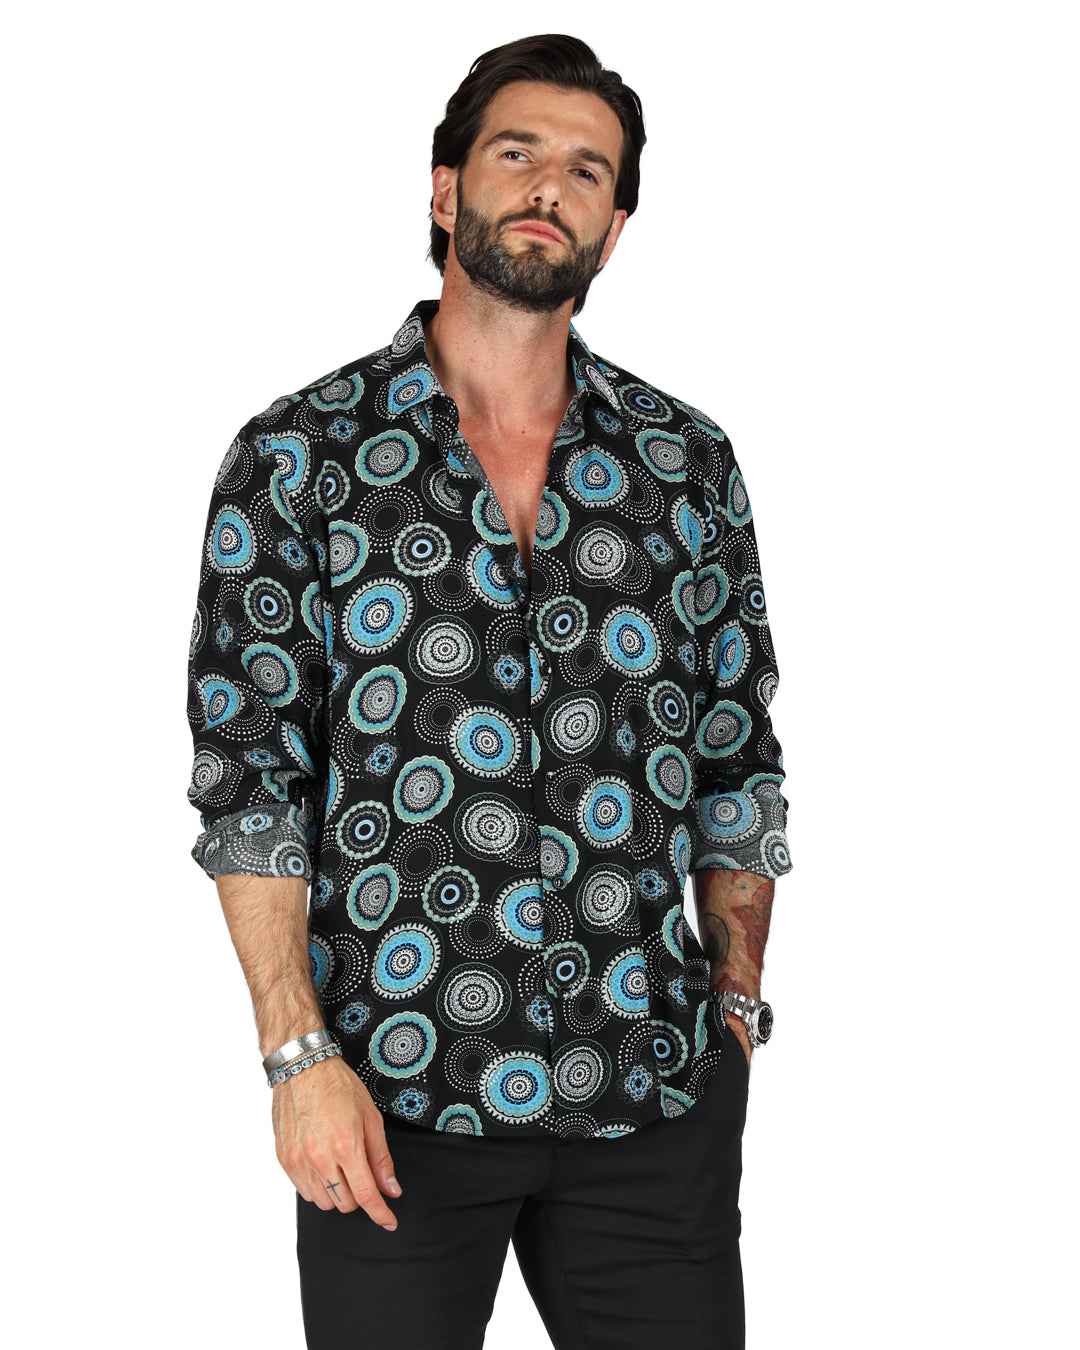 Tobago - Classic black circular pattern shirt